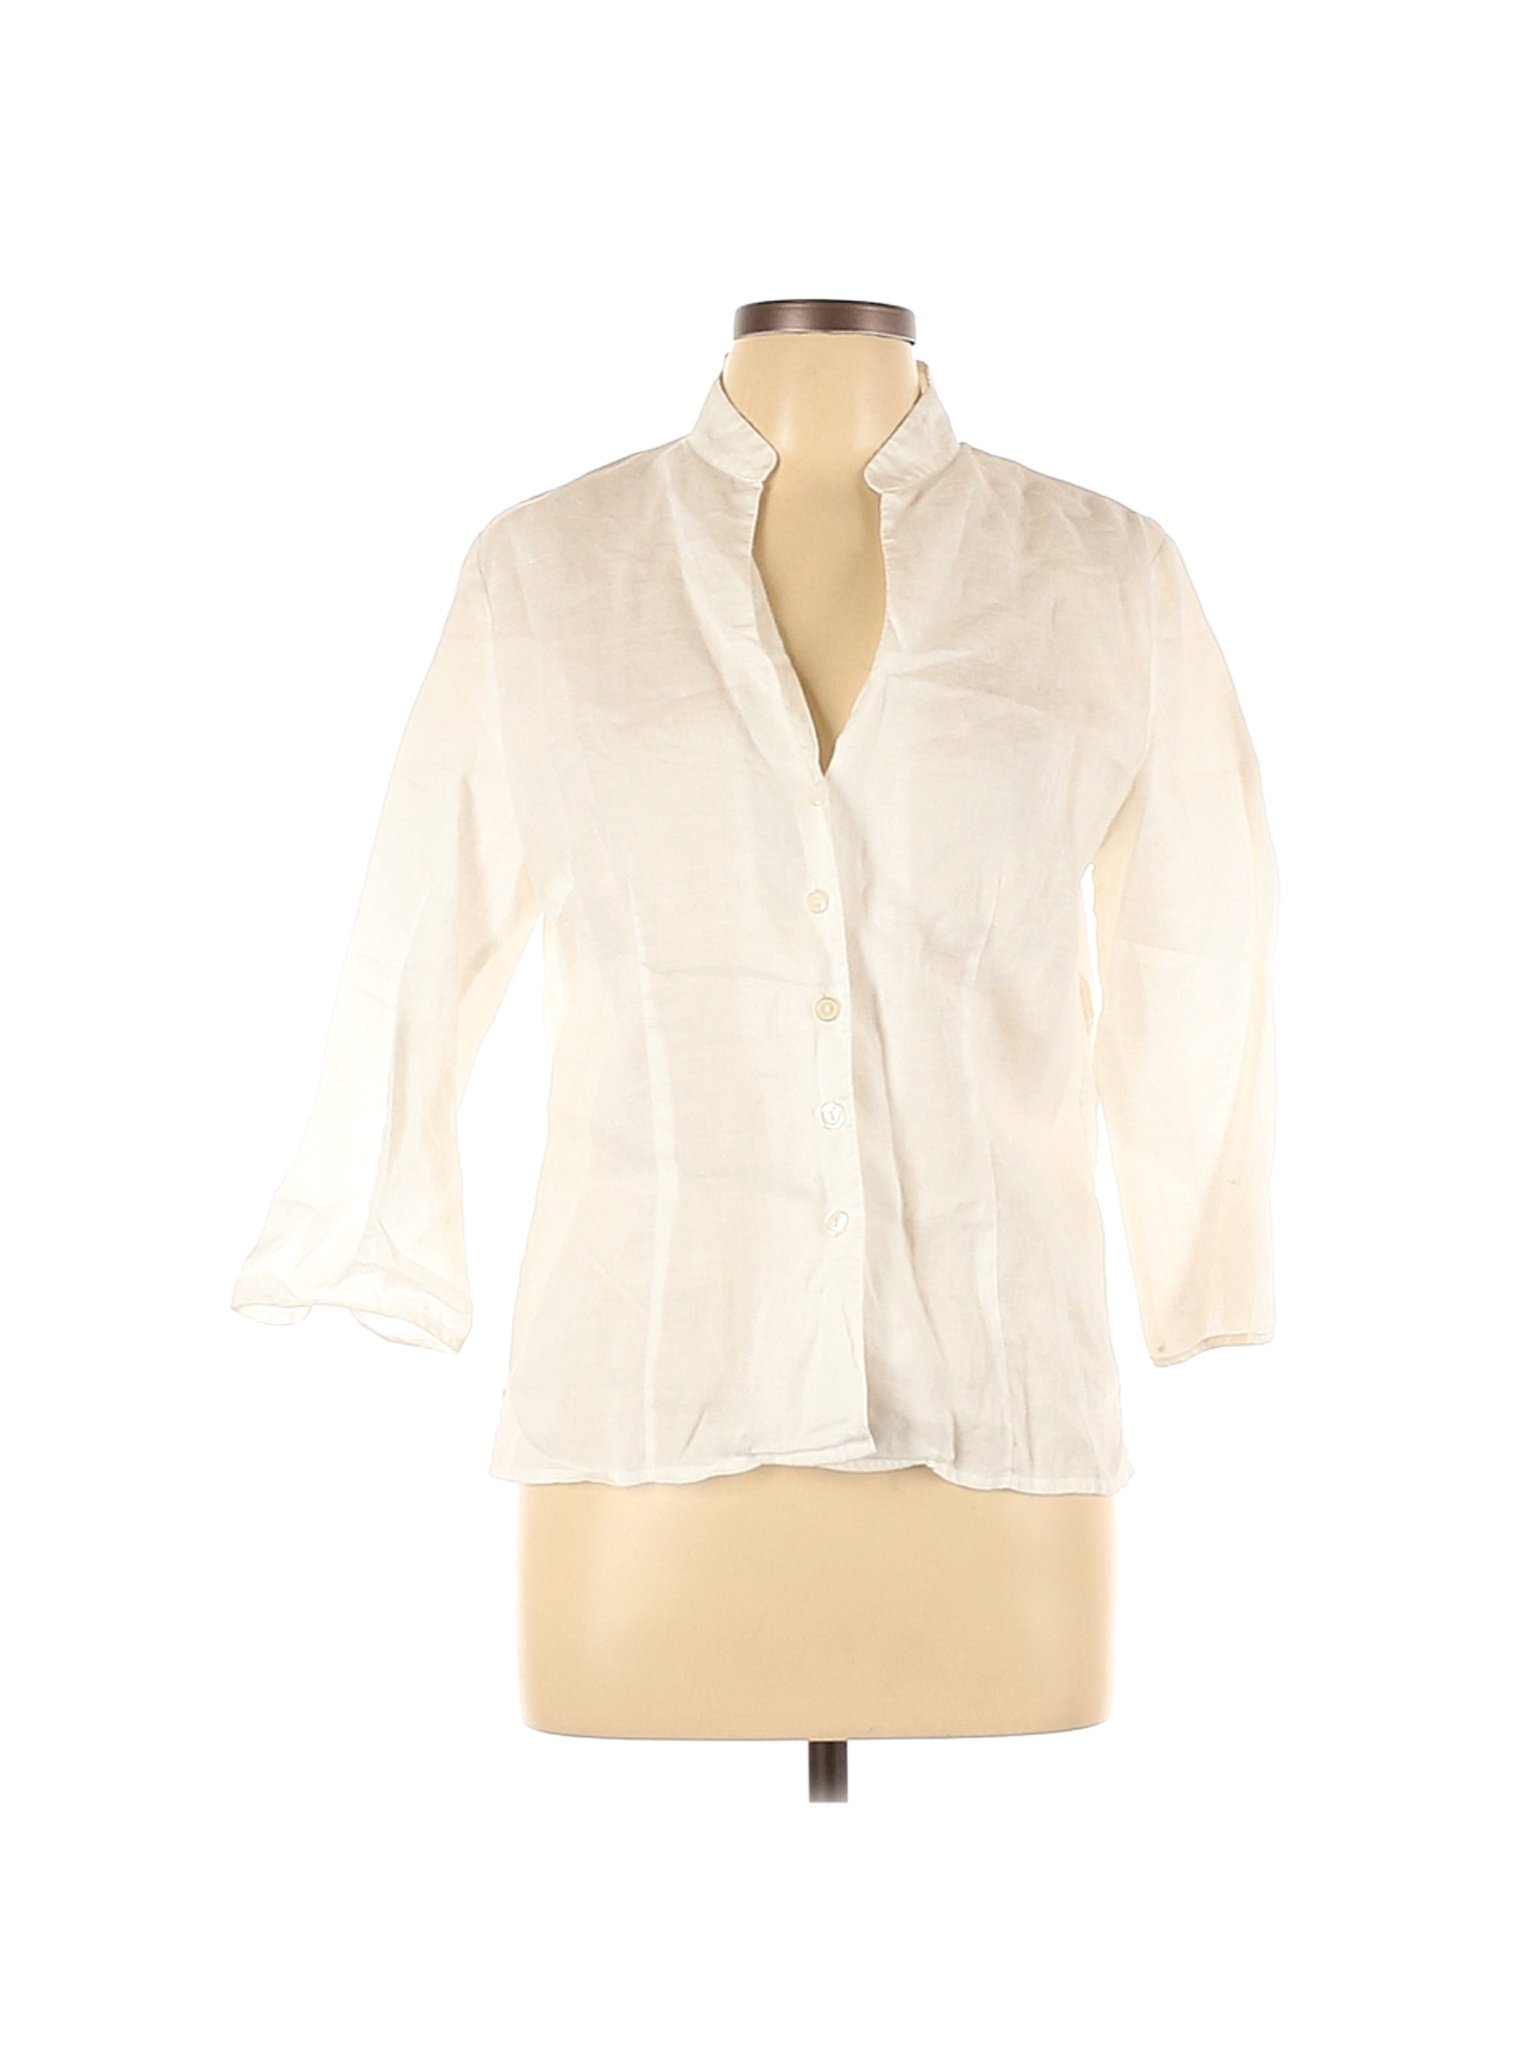 Allison Taylor Women Ivory 3/4 Sleeve Button-Down Shirt L | eBay